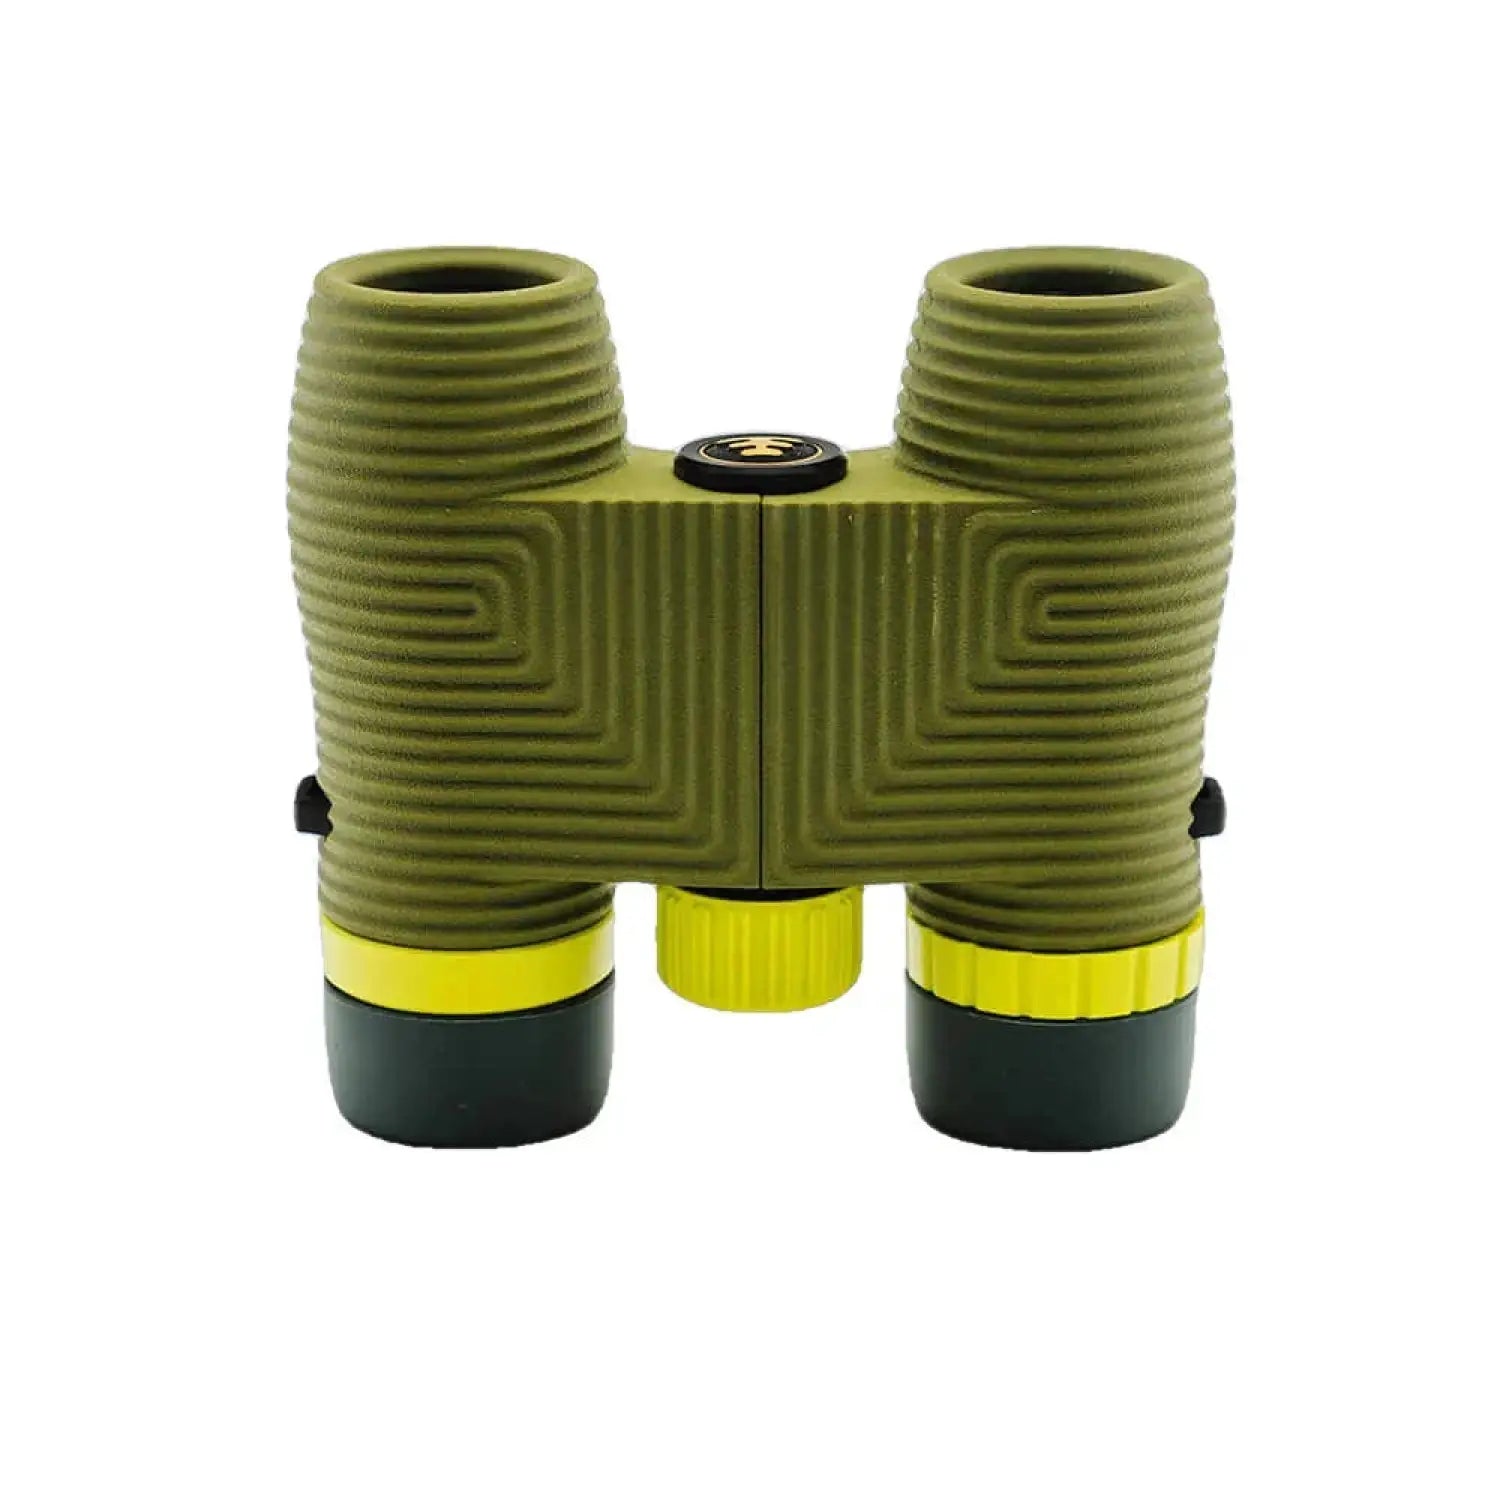 Nocs Standard Issue 10x25 Waterproof Binoculars, Olive Green, top view 